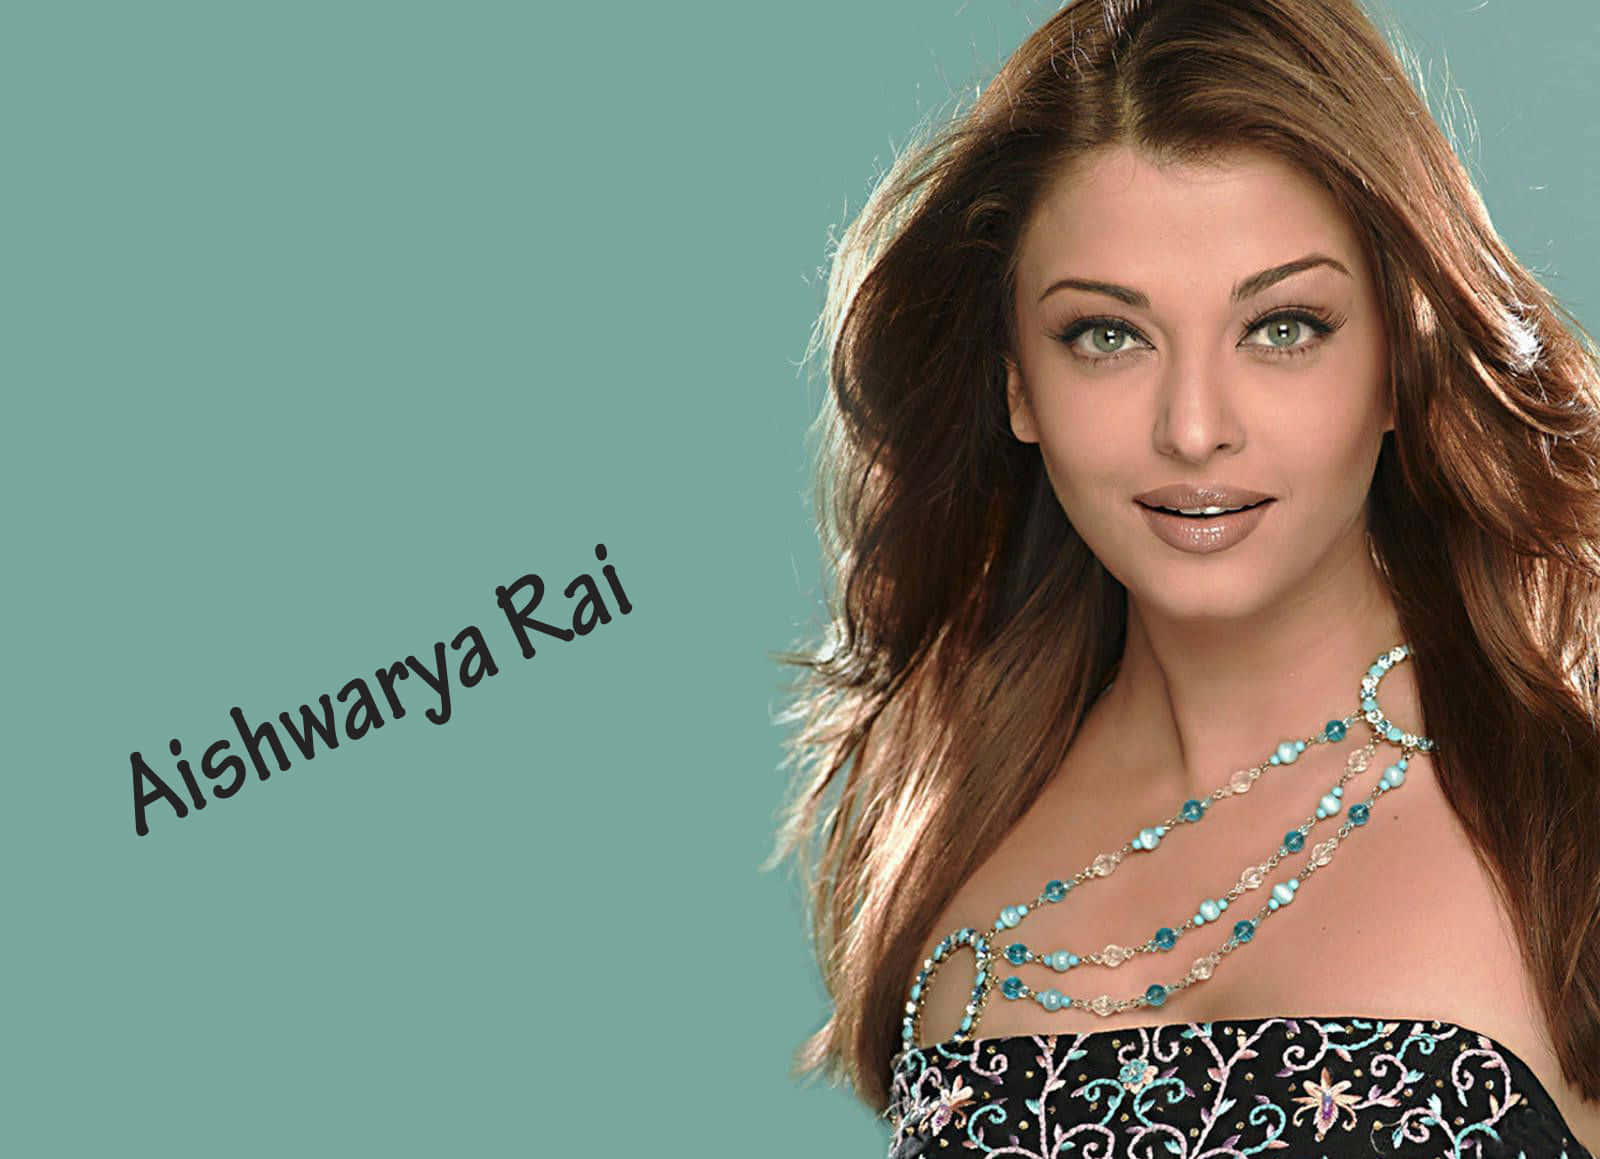 Wallpaper ID: 416350 / Celebrity Aishwarya Rai Phone Wallpaper, , 1080x1920  free download